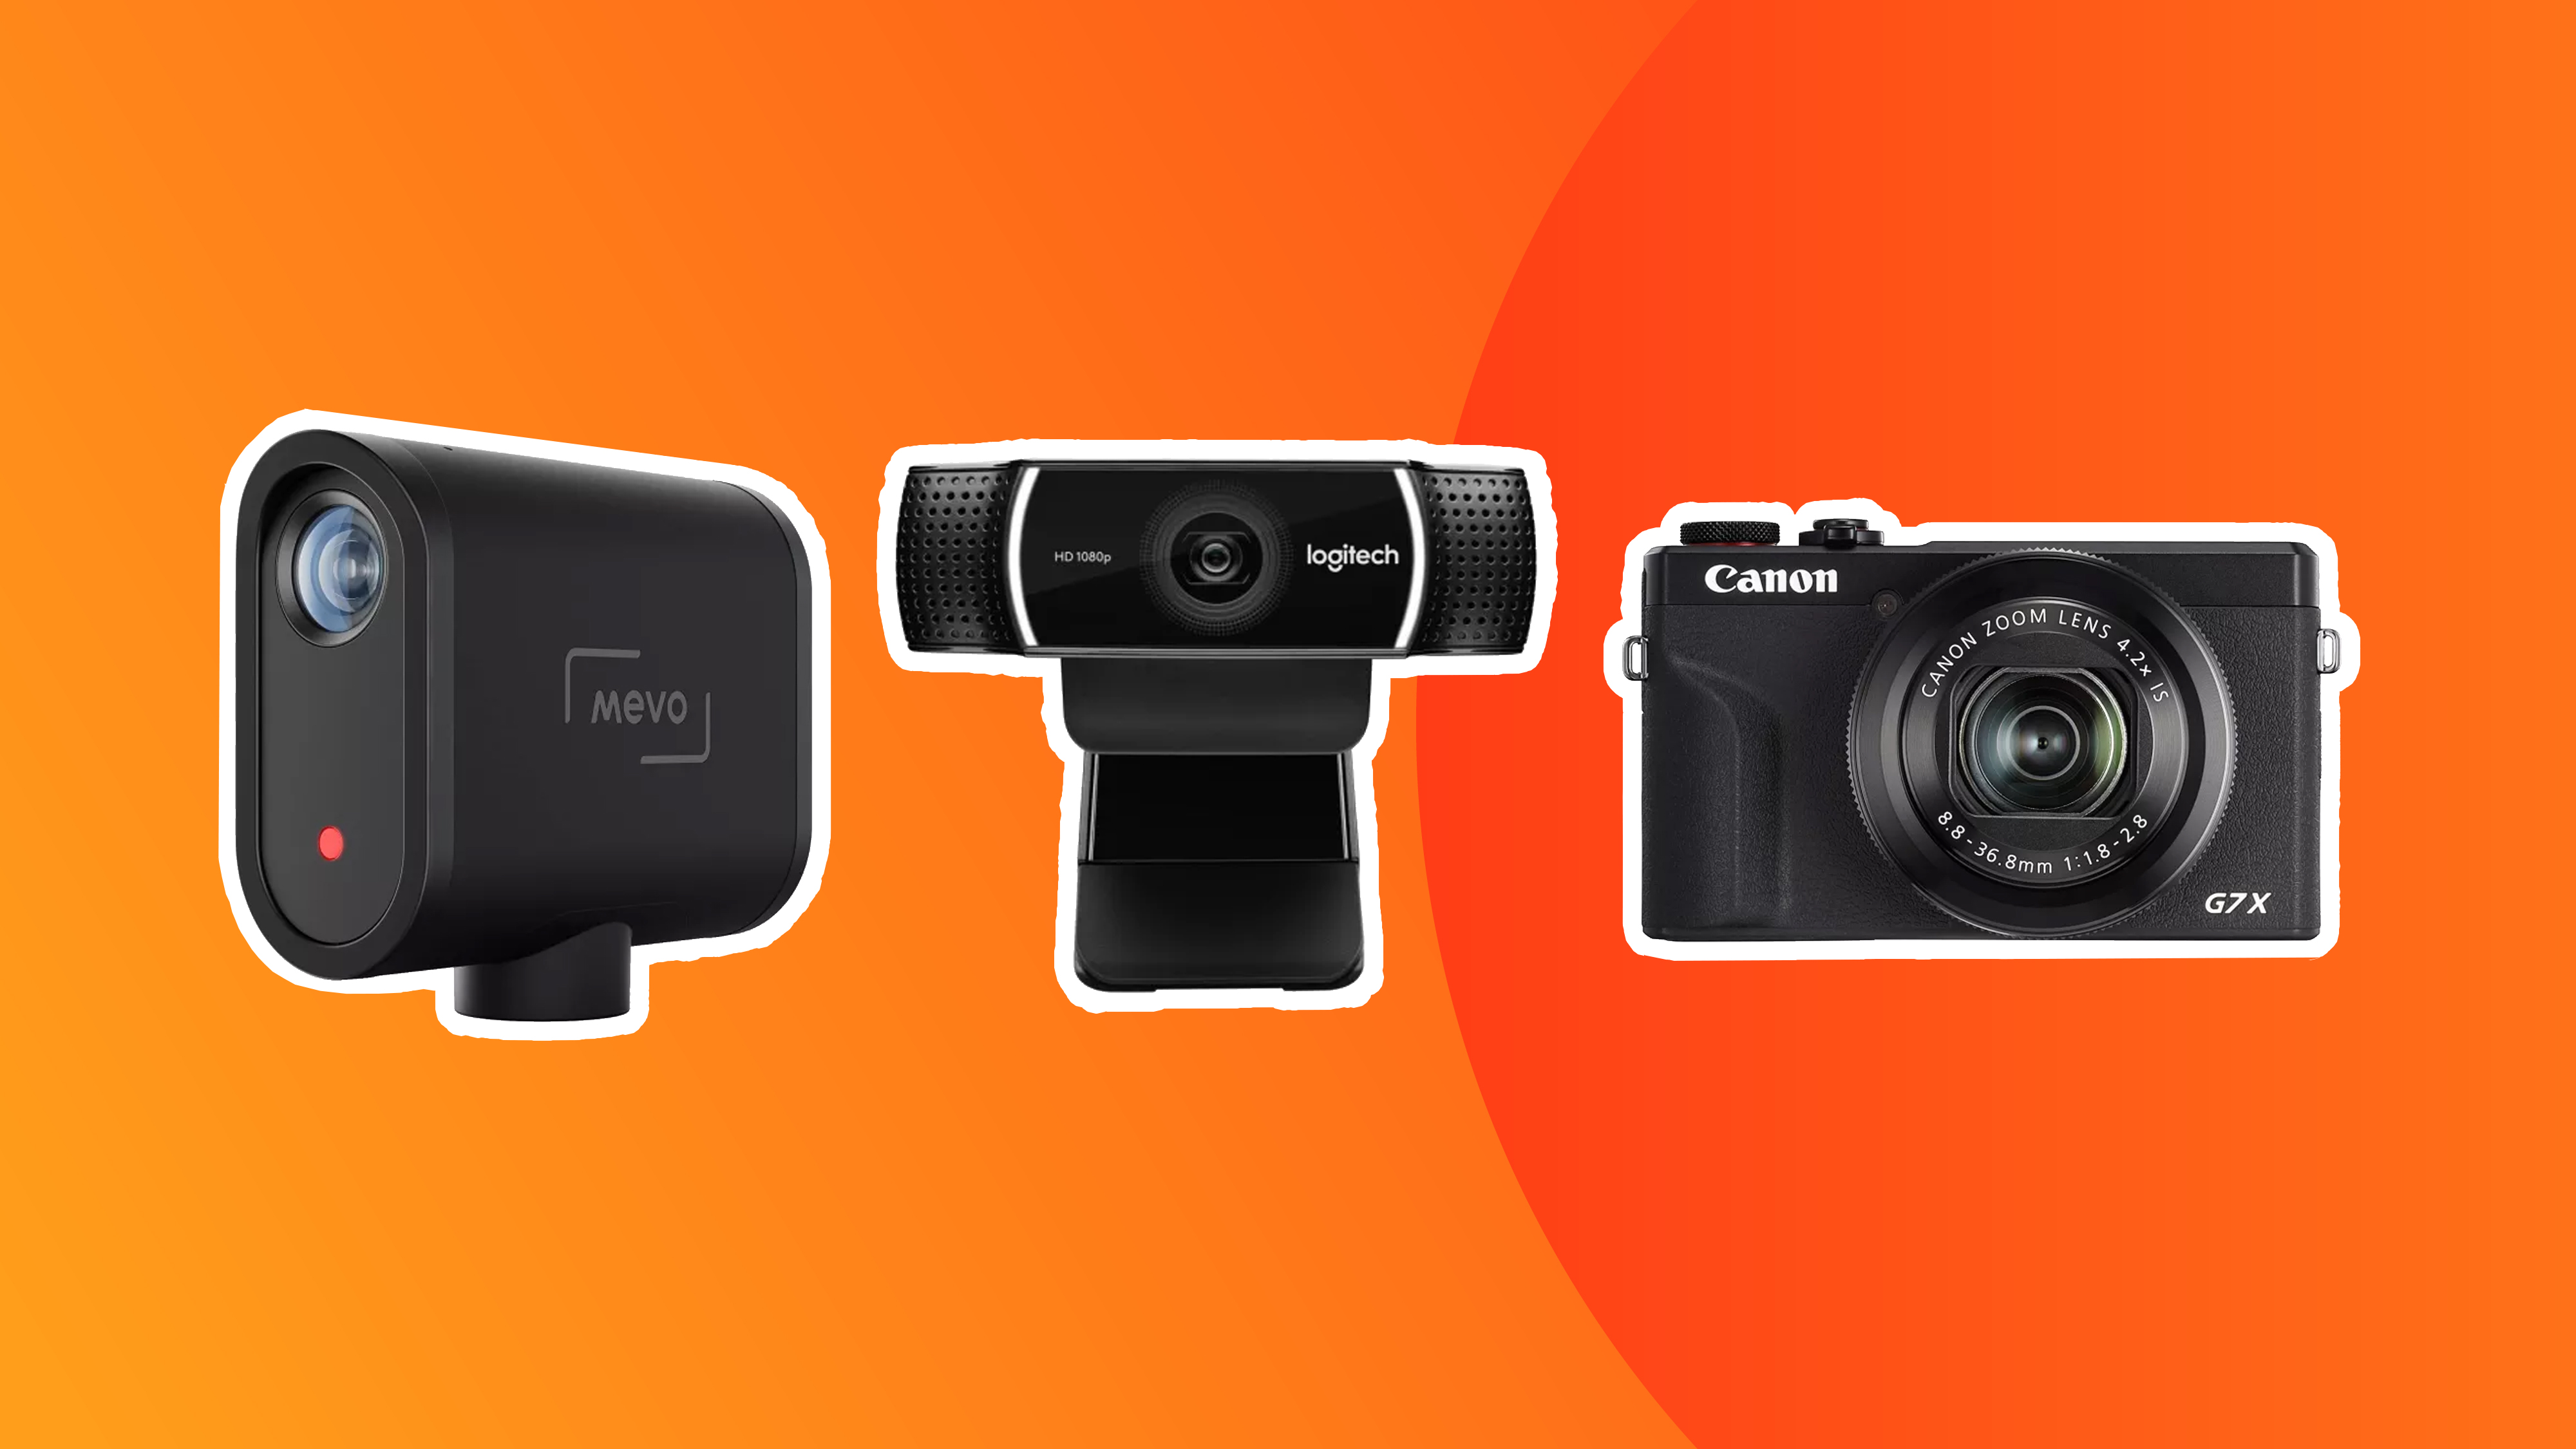 Buy Canon PowerShot G7 X Mark III Digital Camera in Black - Jessops